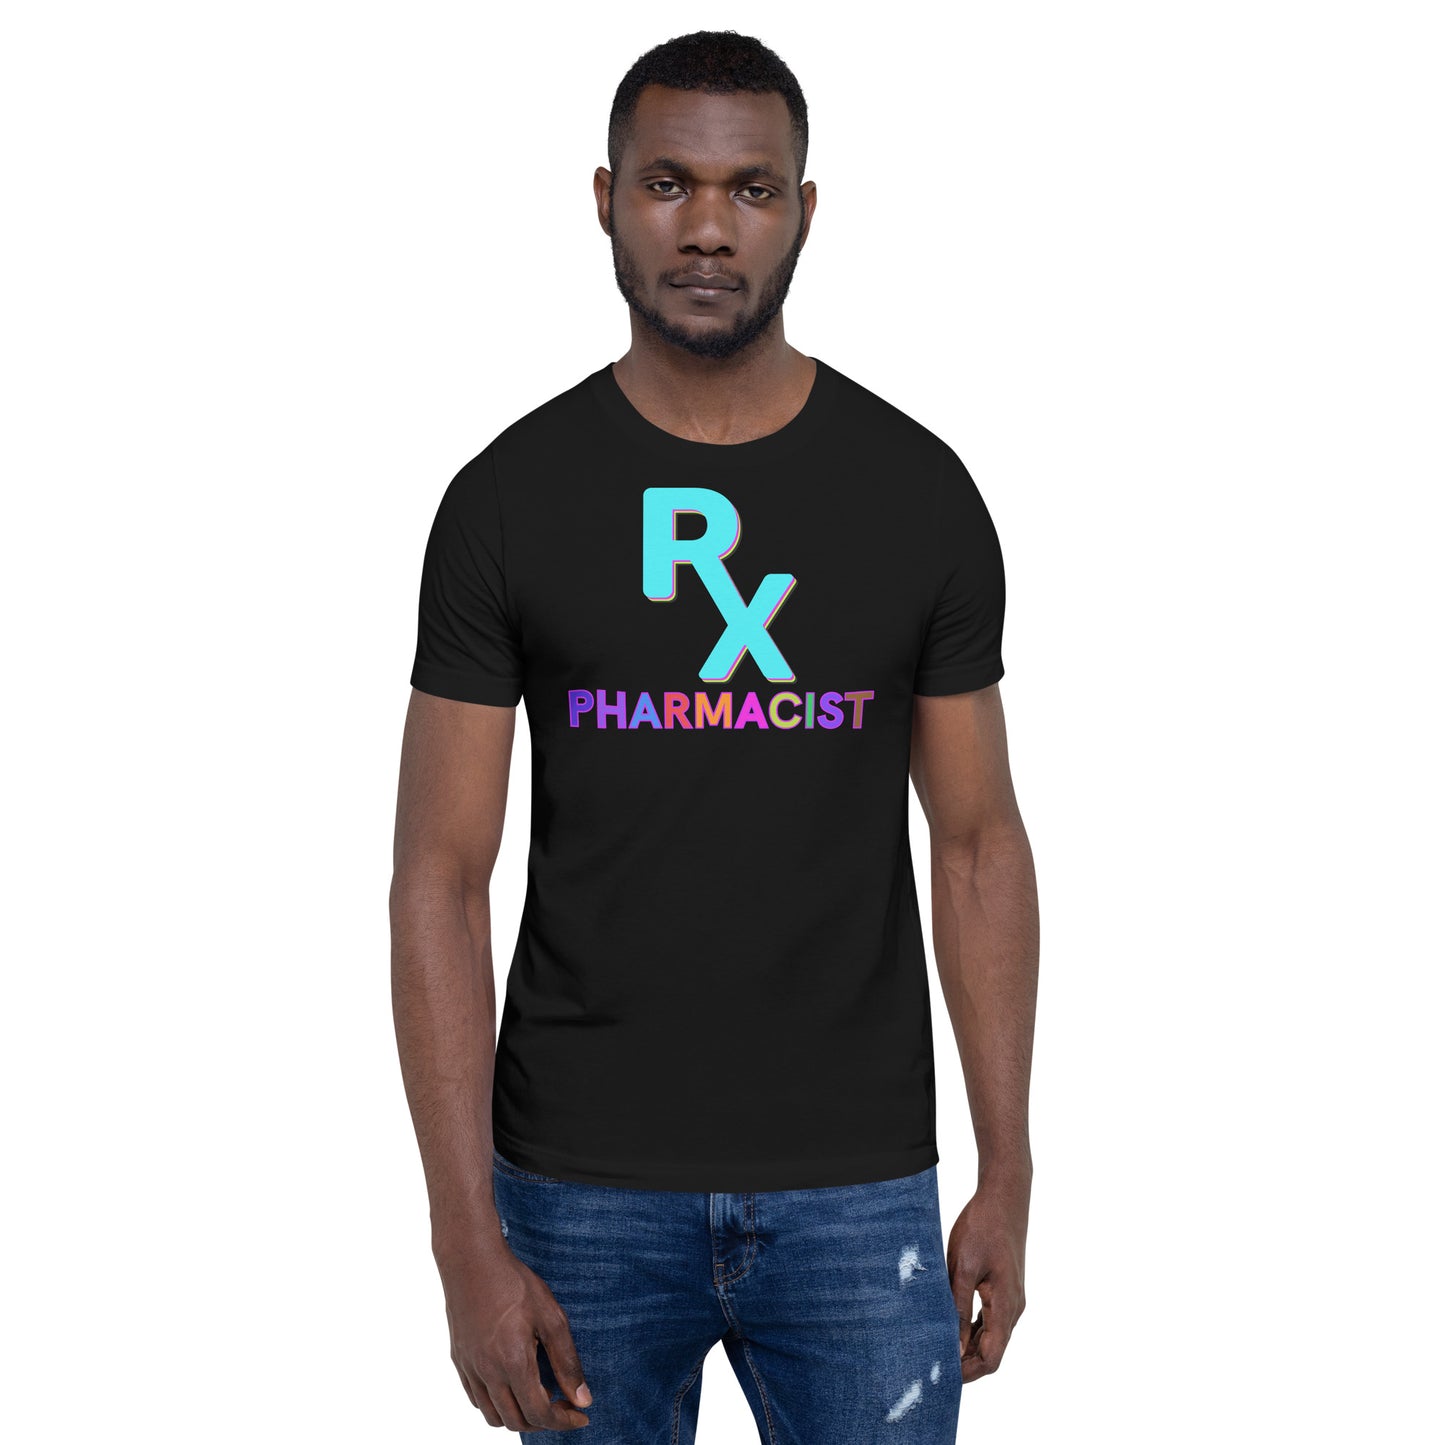 RX Pharmacist Unisex t-shirt